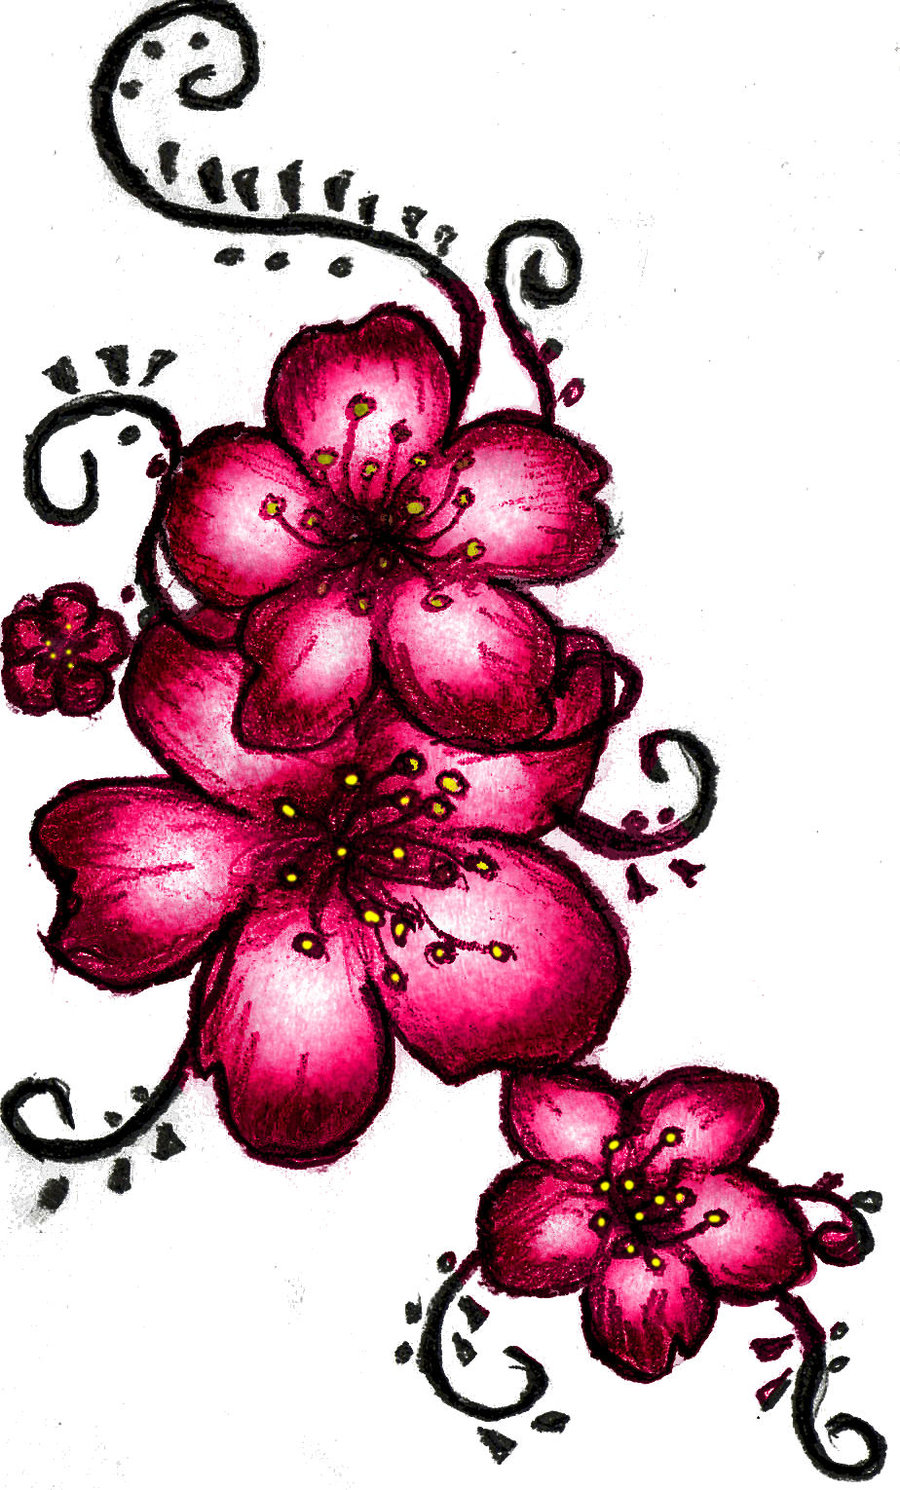 deviantART: More Like Cherry Blossom Henna Tattoo 2 by LSD-